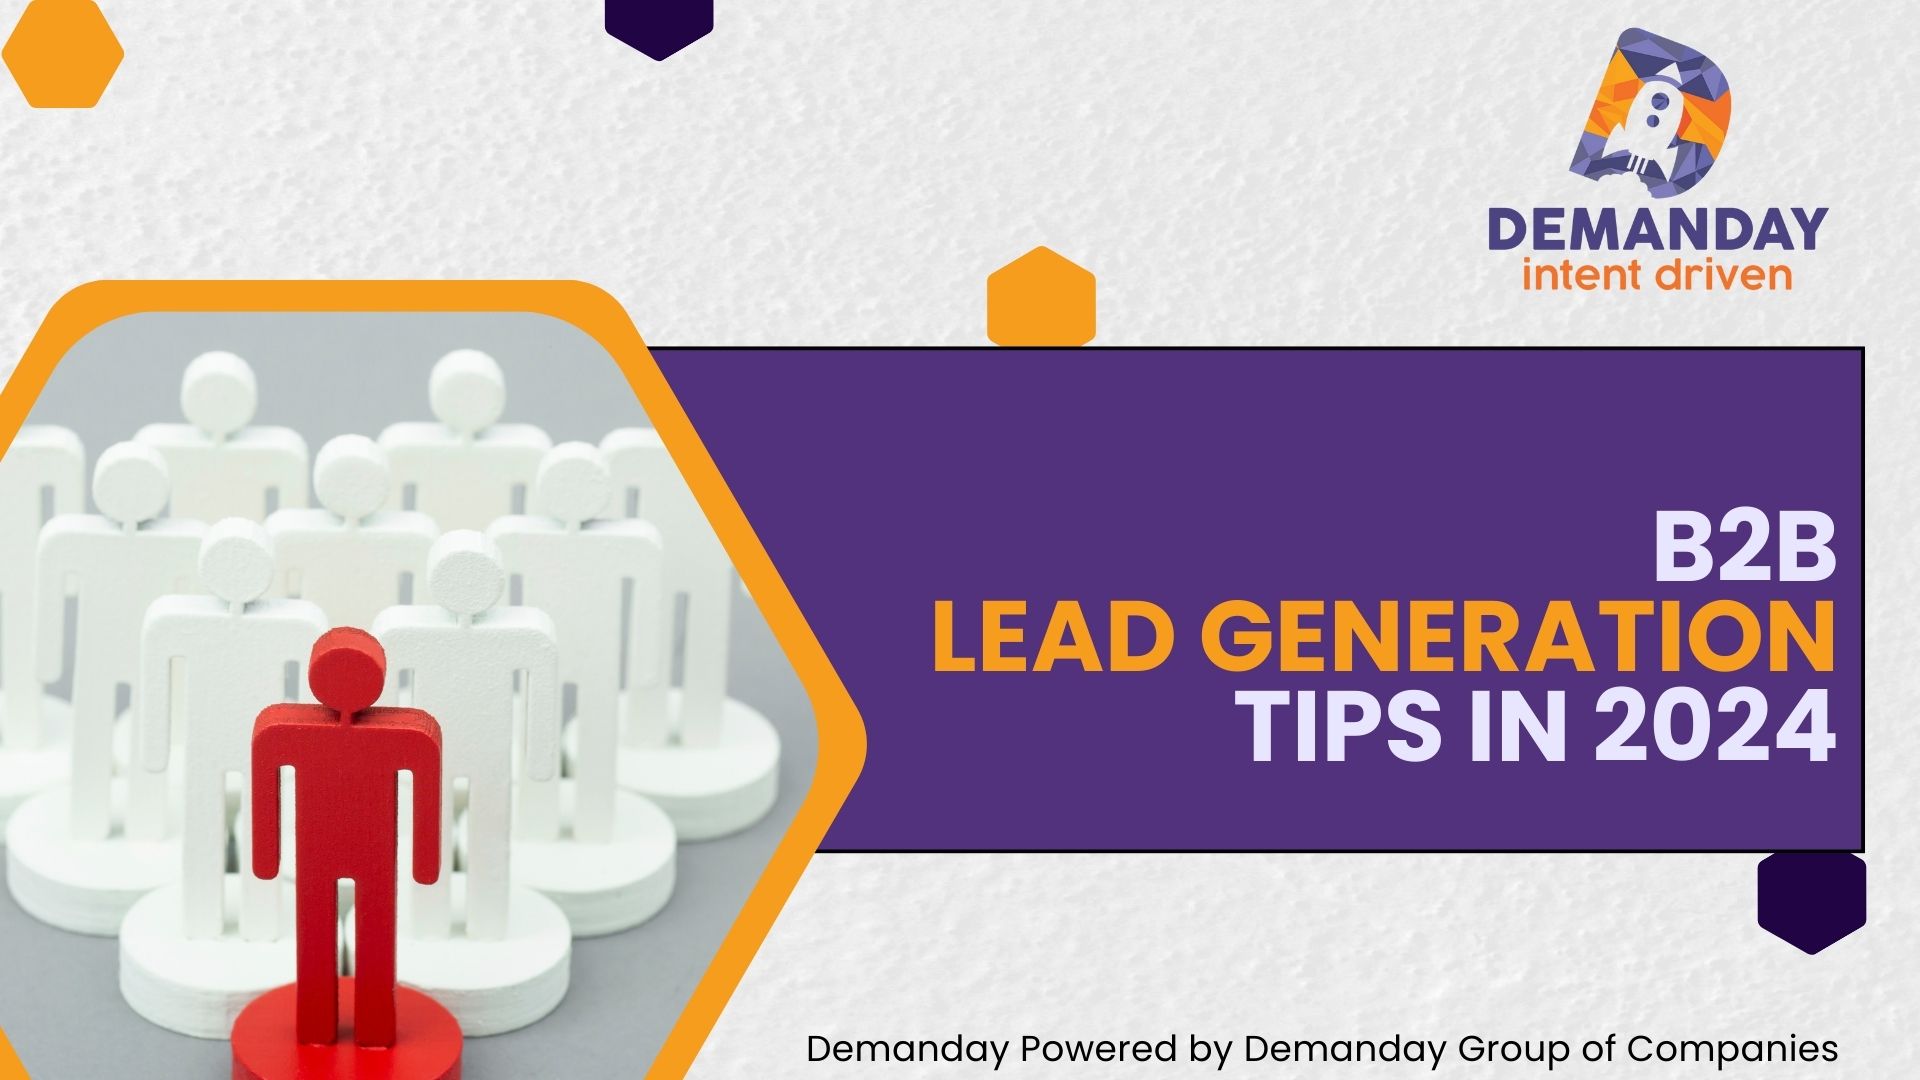 B2B lead generation tips